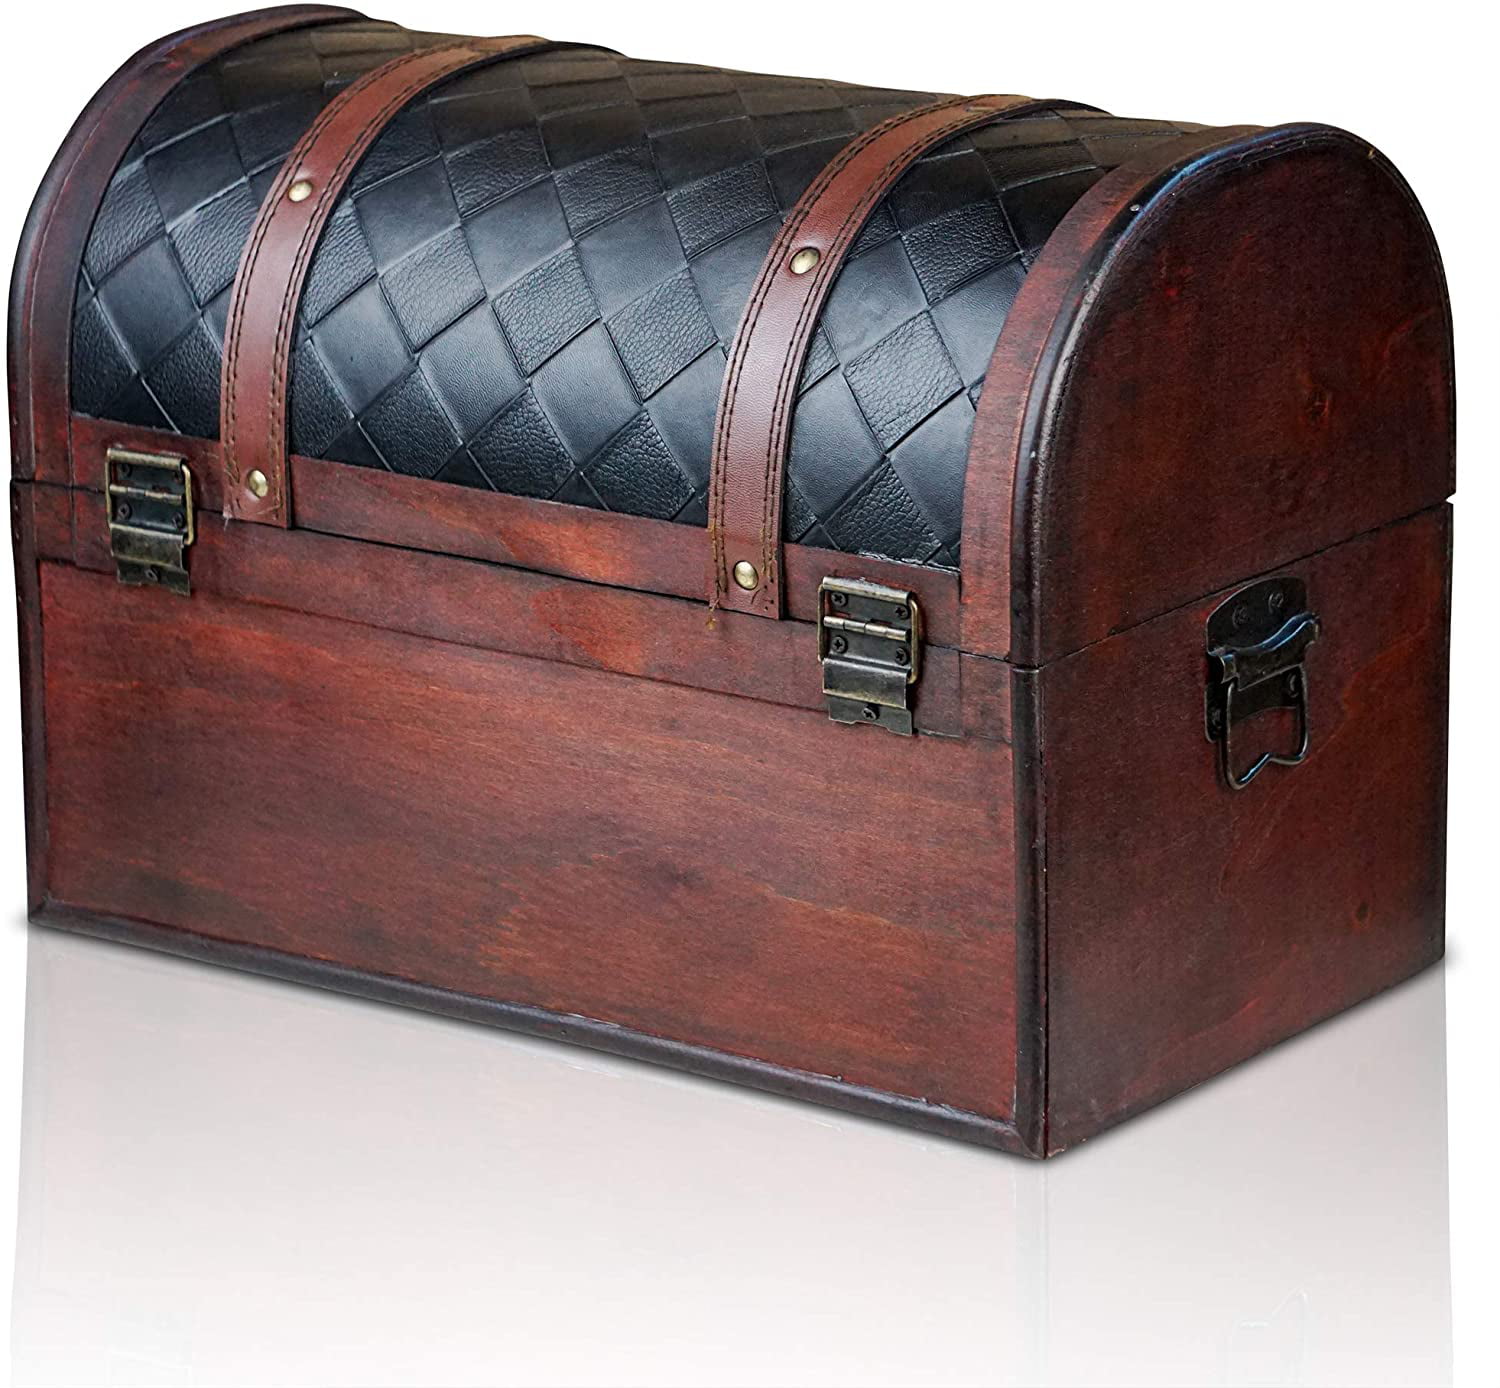 Brynnberg wooden pirate treasure chest Watson 38x23x27cm decorative storage box 